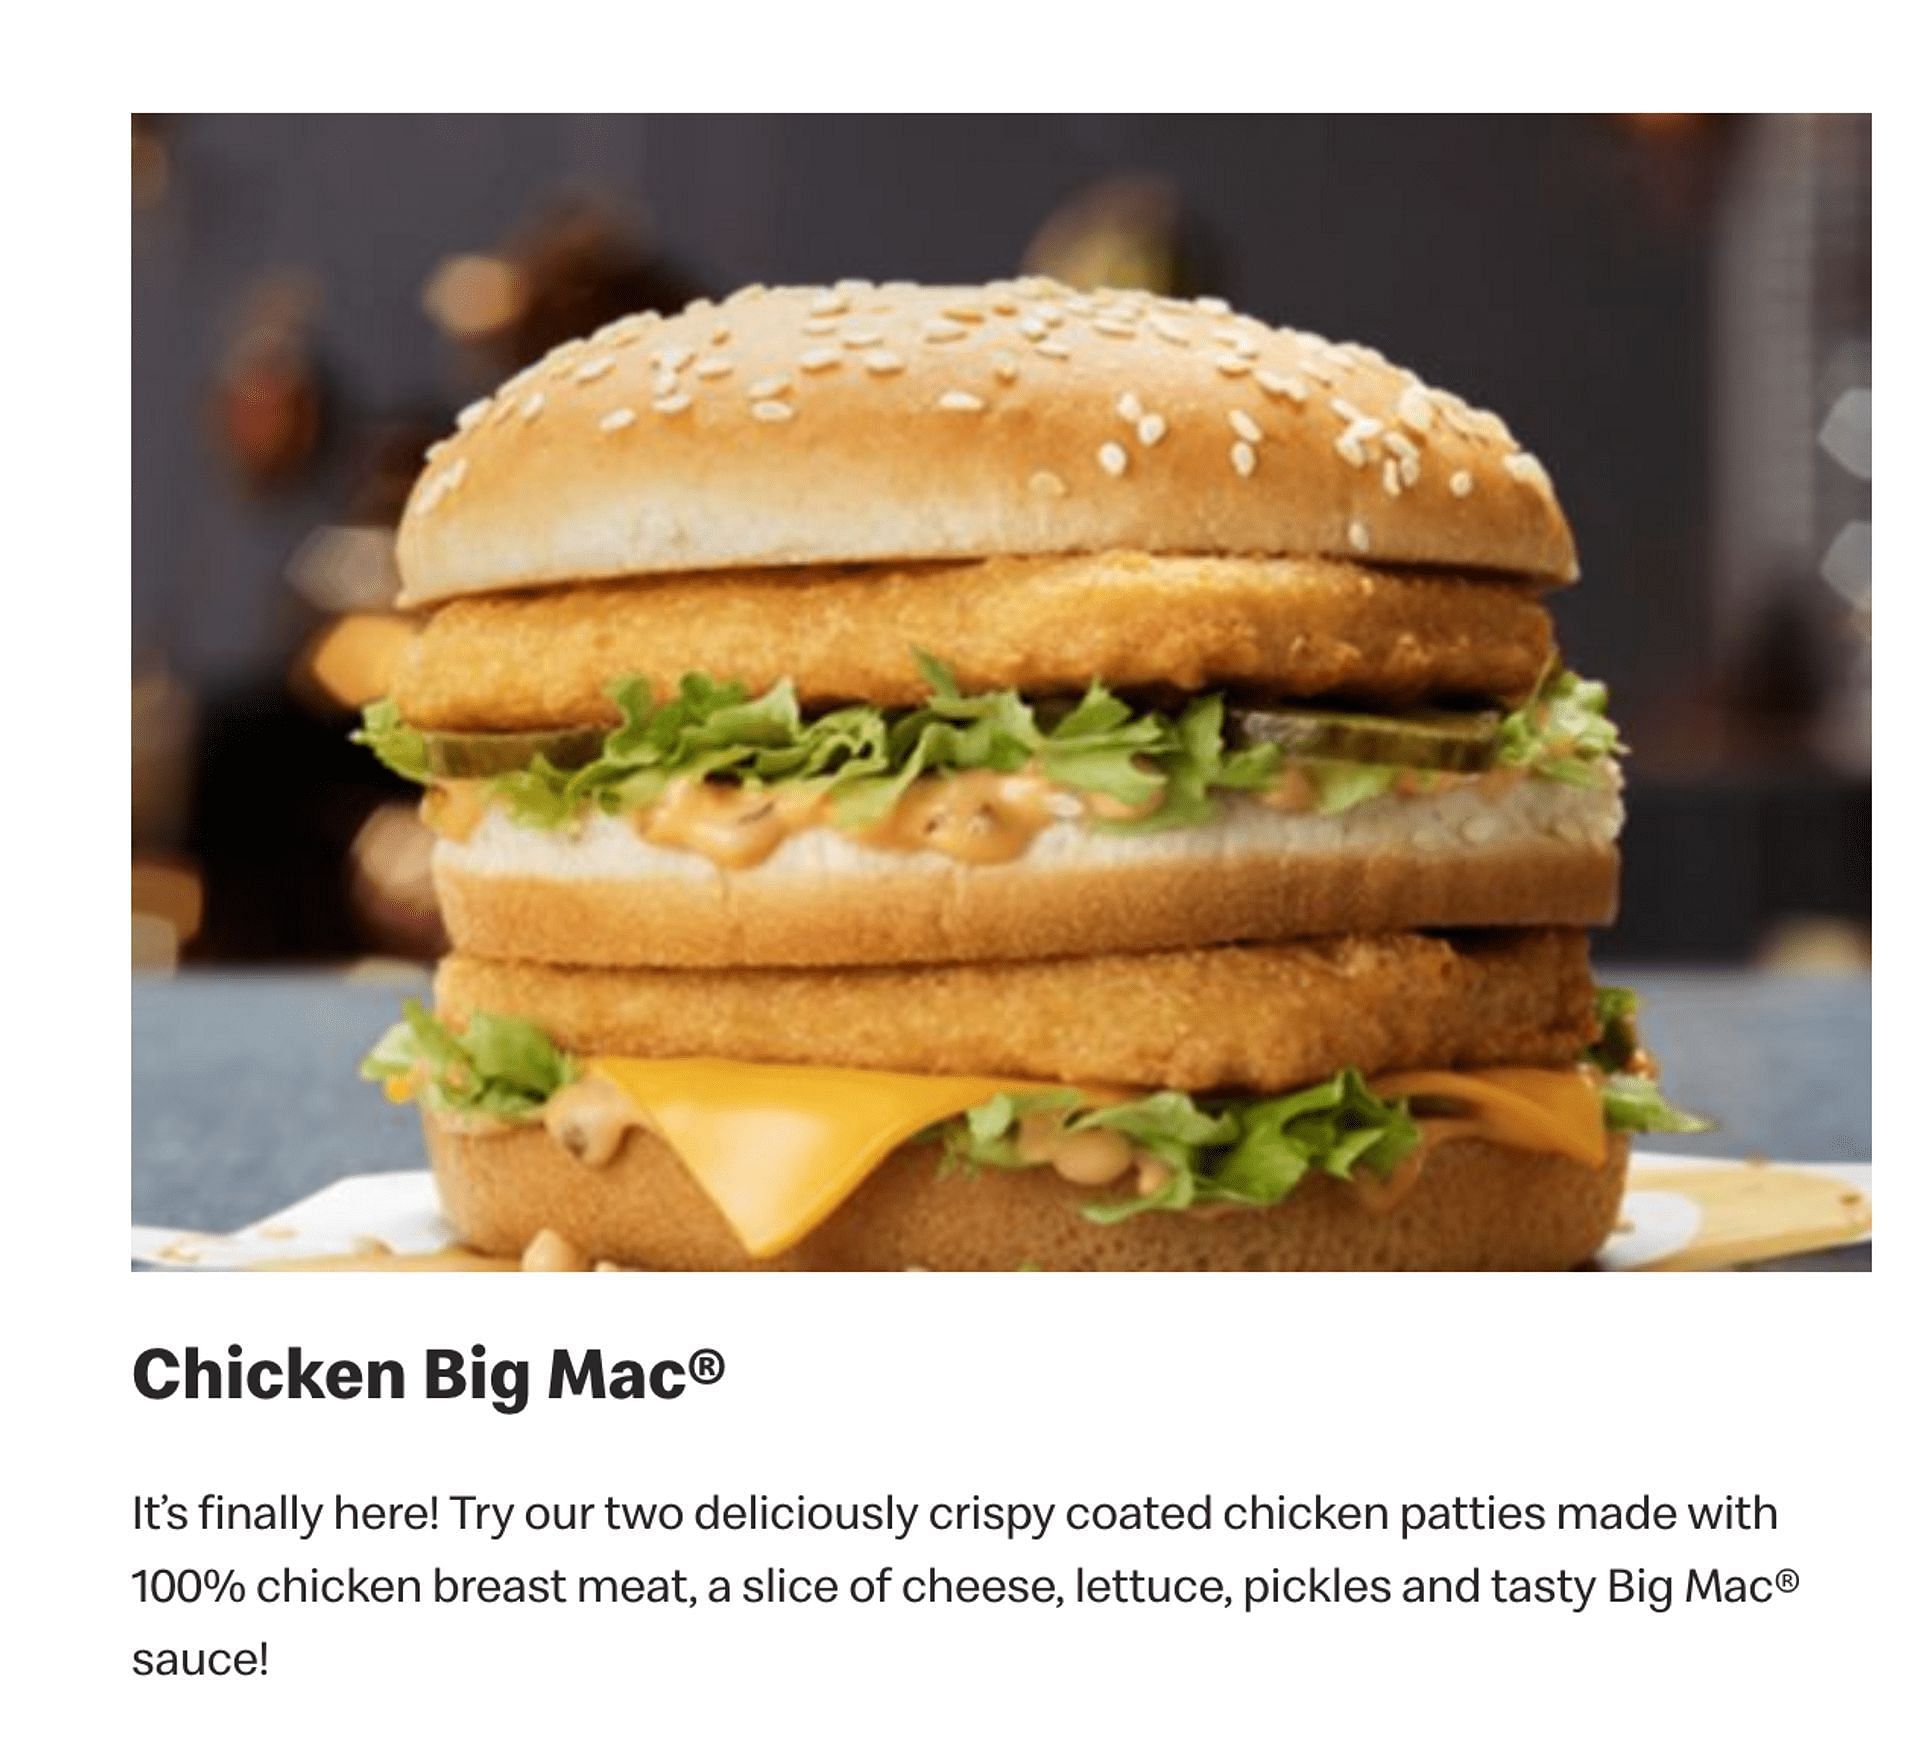 Chicken big mac makes its way to America: Netizens shower mixed reviews. (Image via McDonald&#039;s)